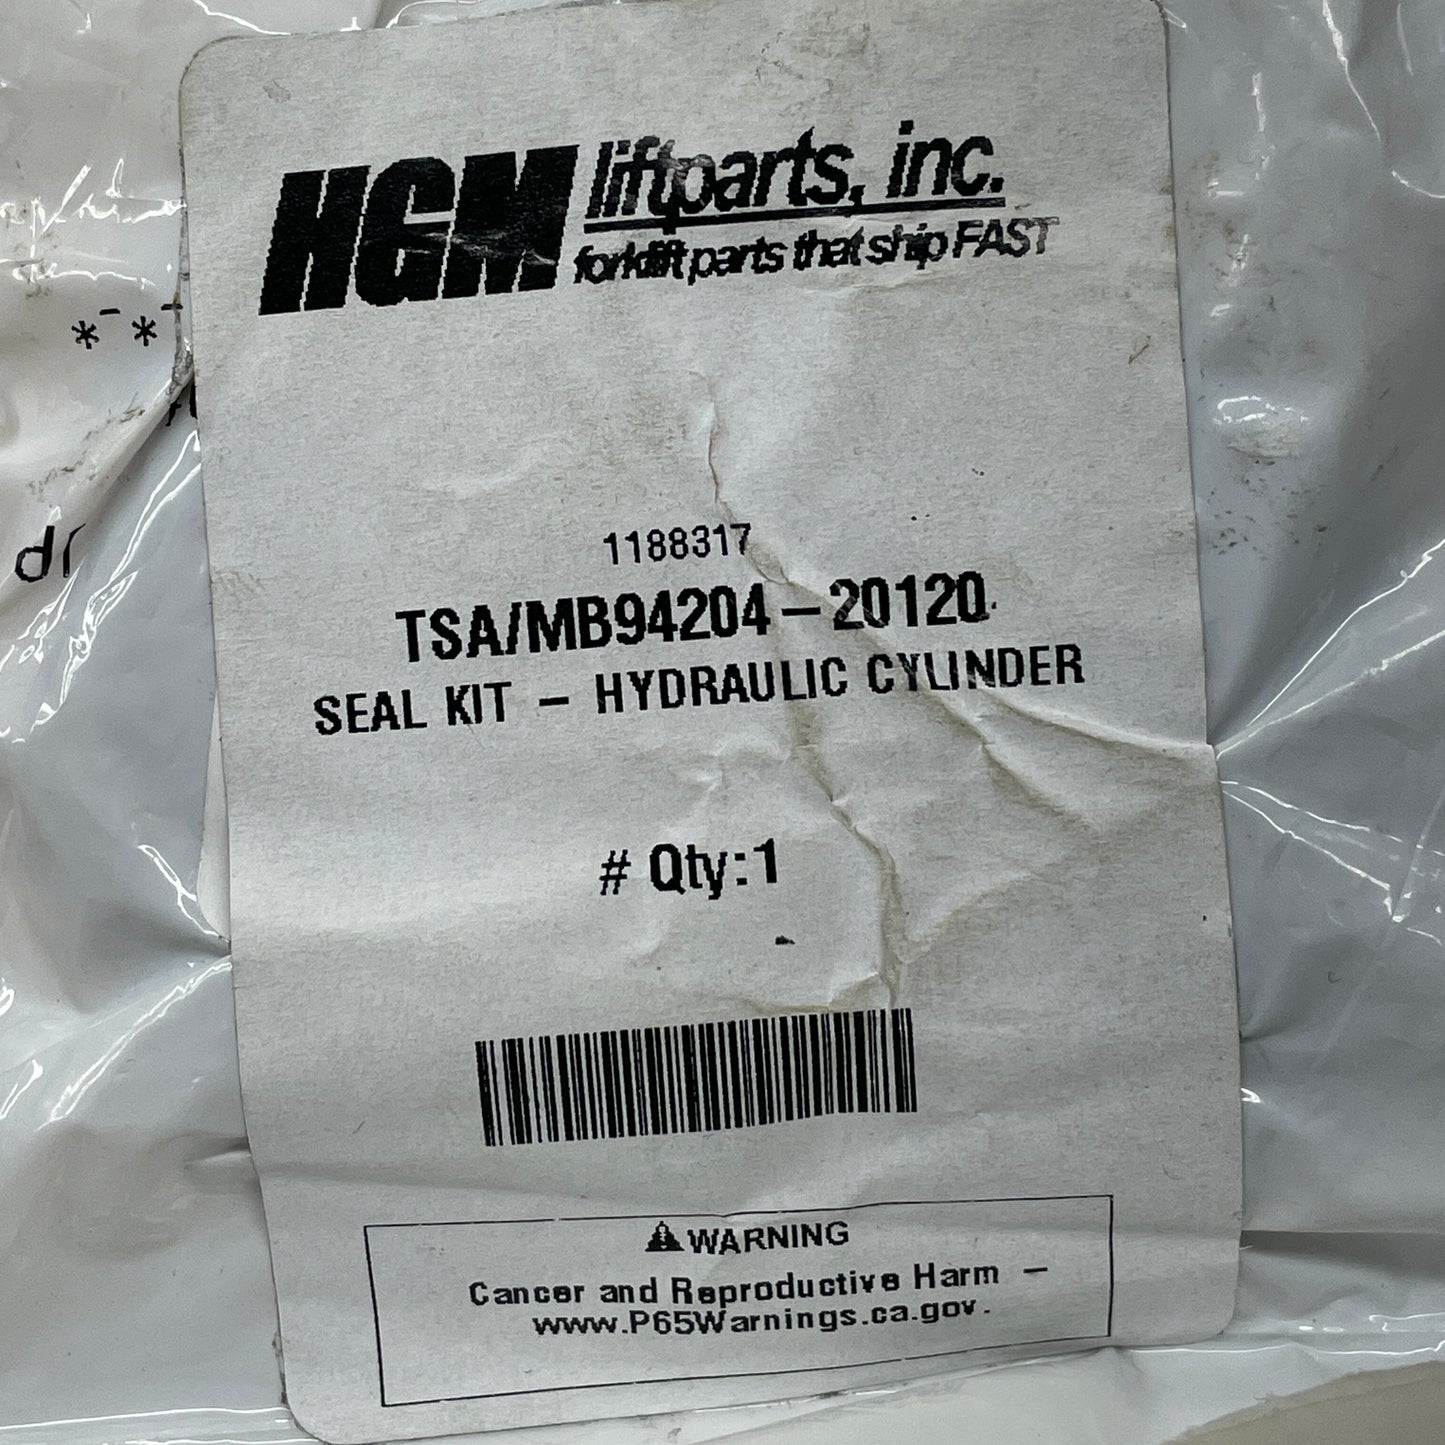 HGM LIFTPARTS, INC. Mitsubishi Seal Kit - Hydraulic Cylinder MB94204-20120